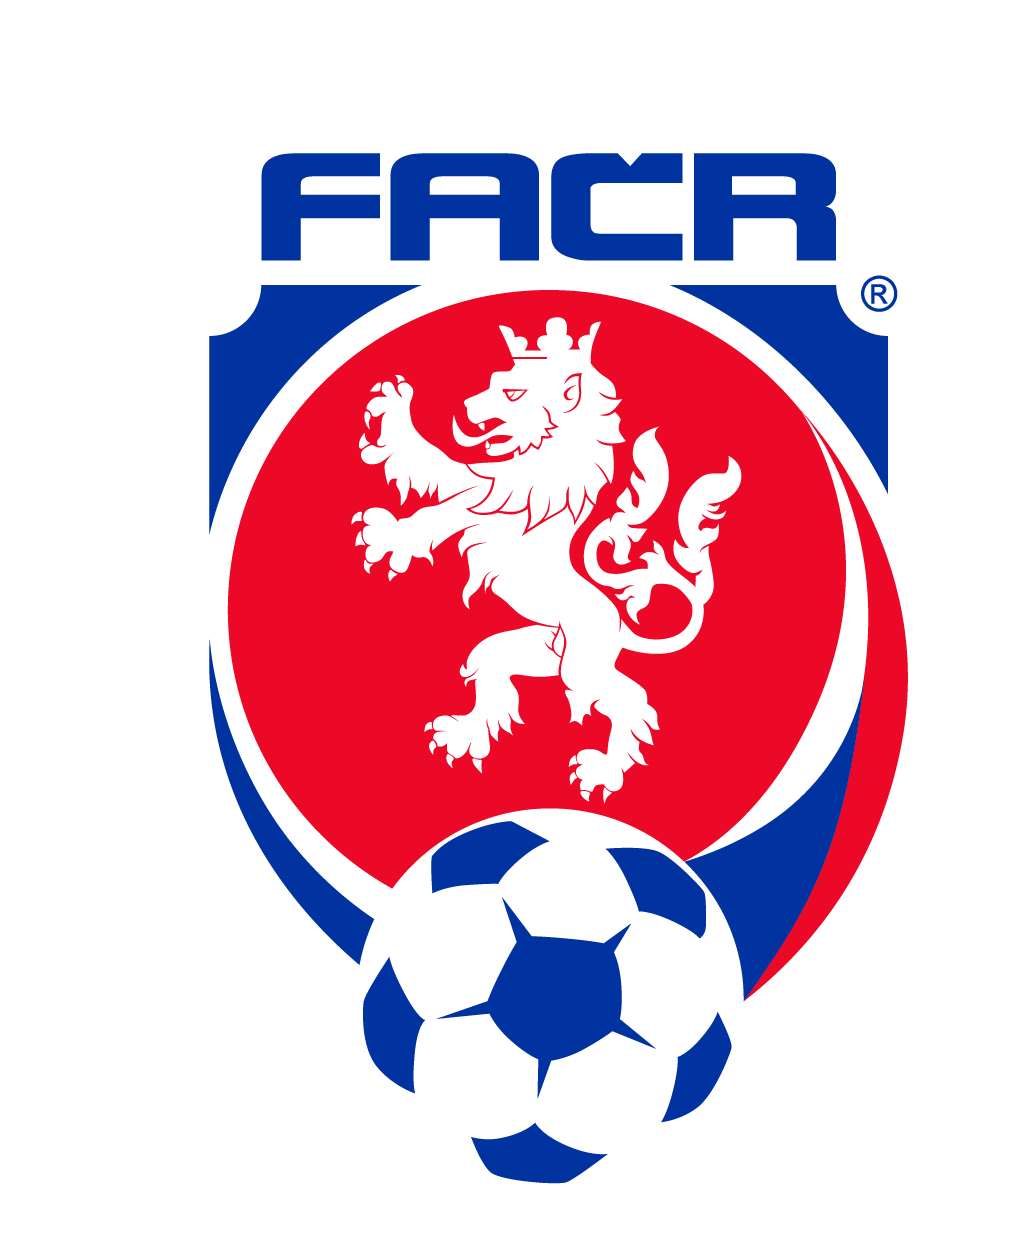 捷克  logo